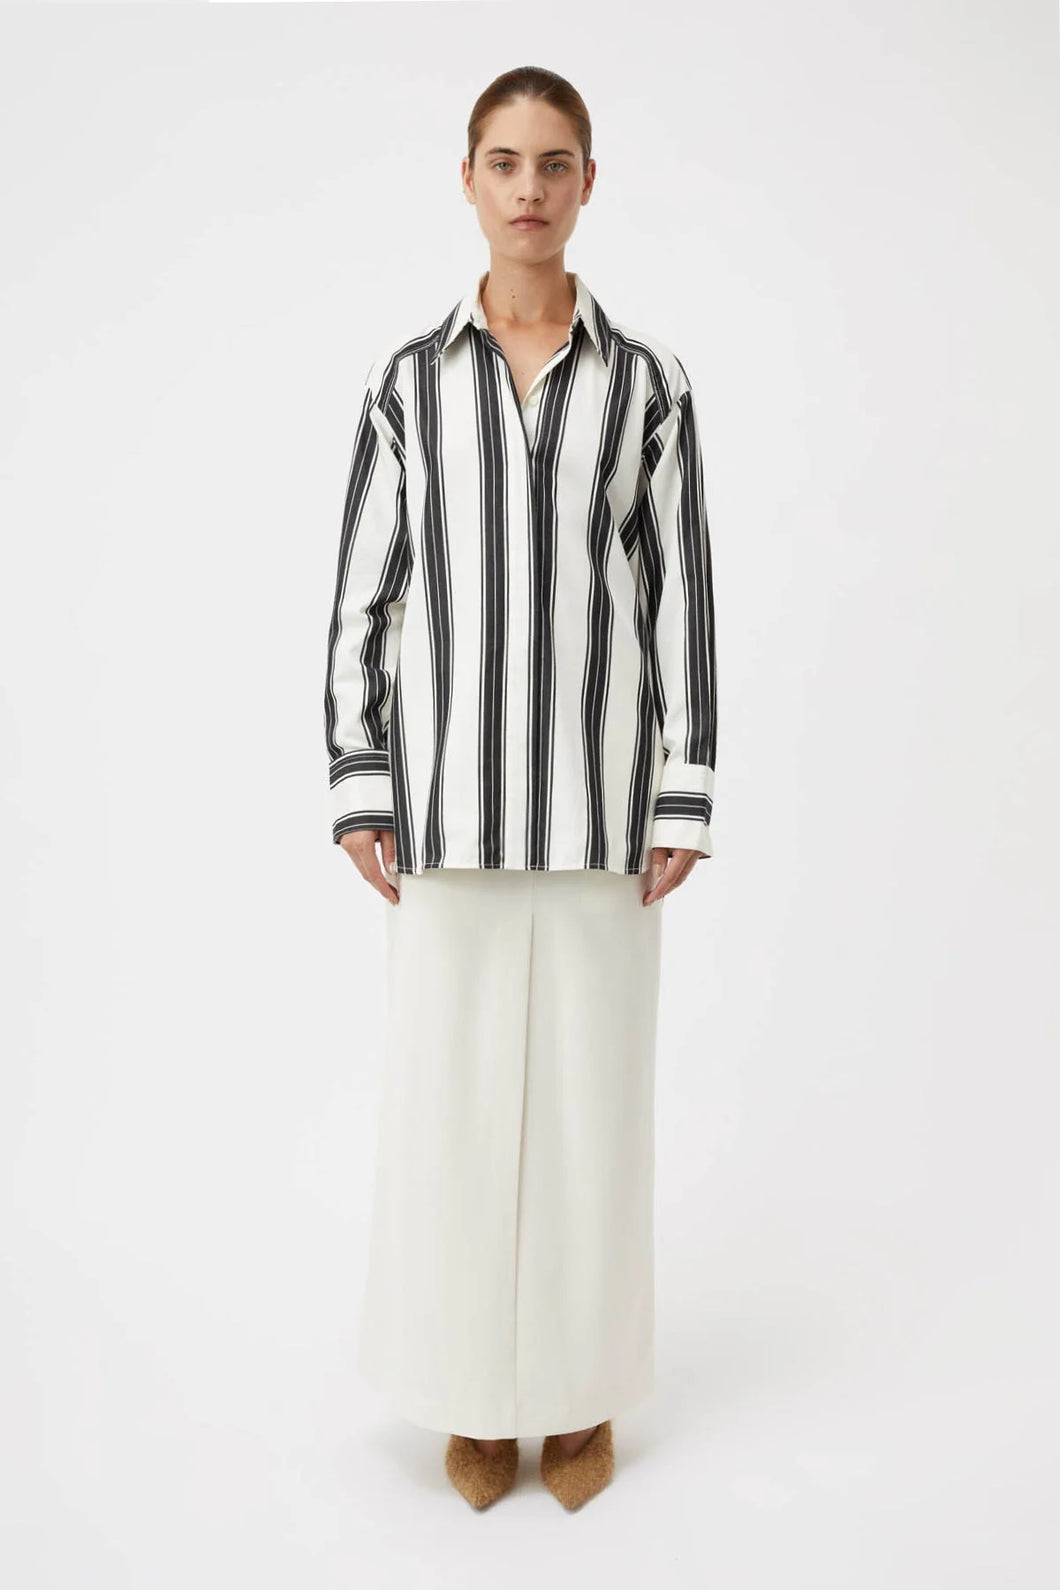 Kiah Shirt | Black and Cream Stripe